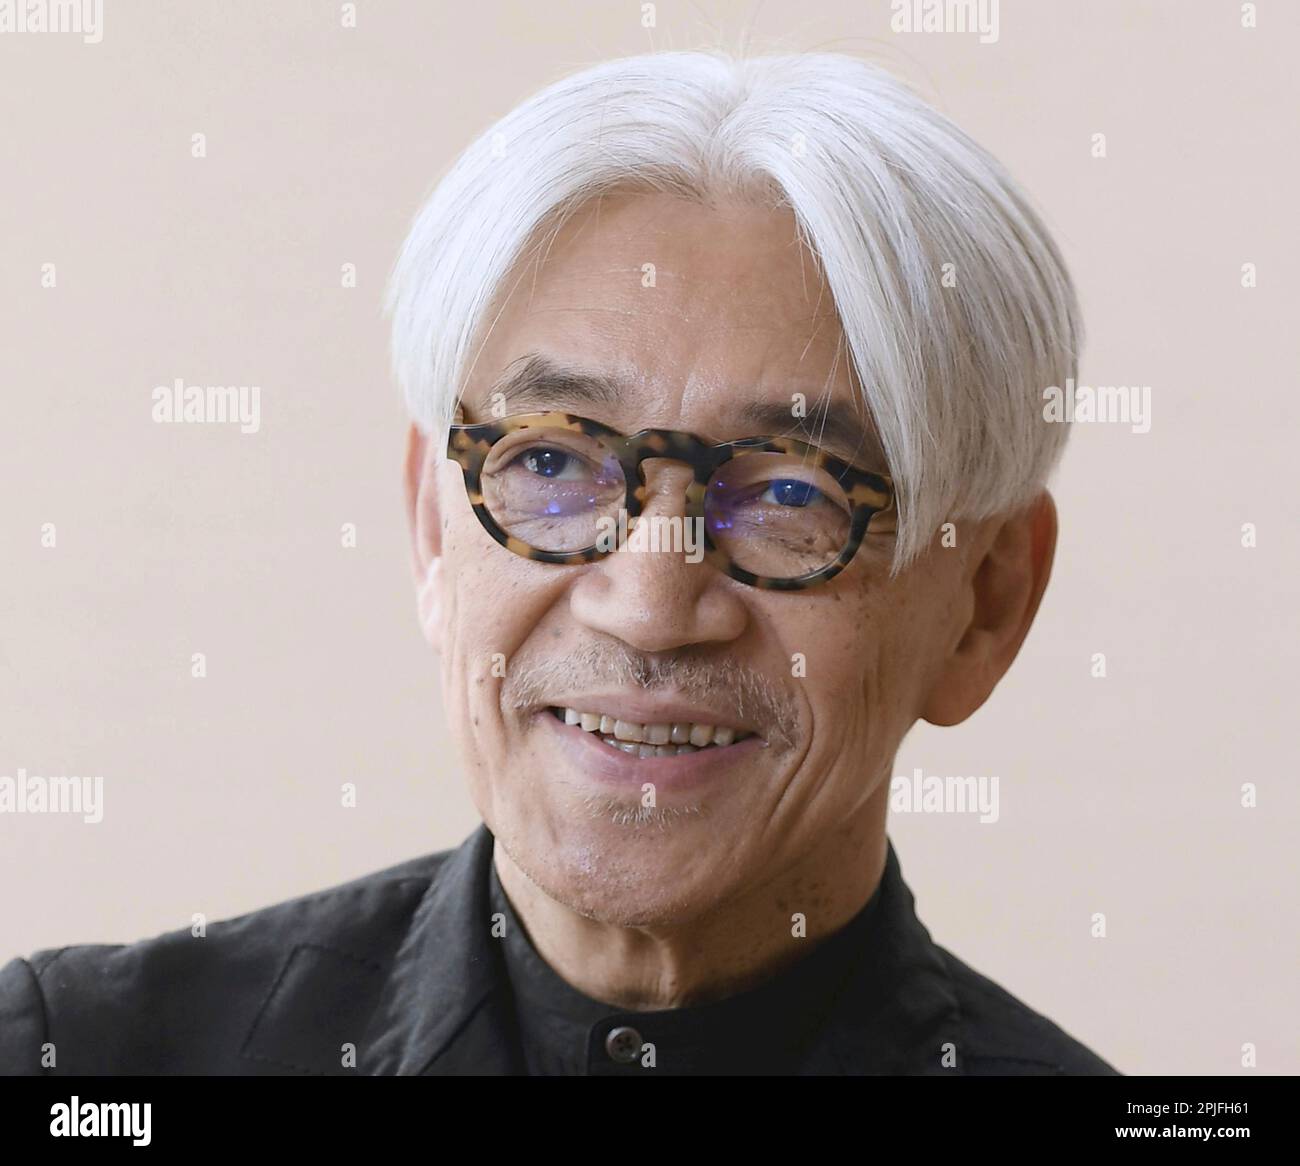 In Photos: Remembering award-winning Japanese musician Ryuichi Sakamoto［写真特集7/20］-  毎日新聞